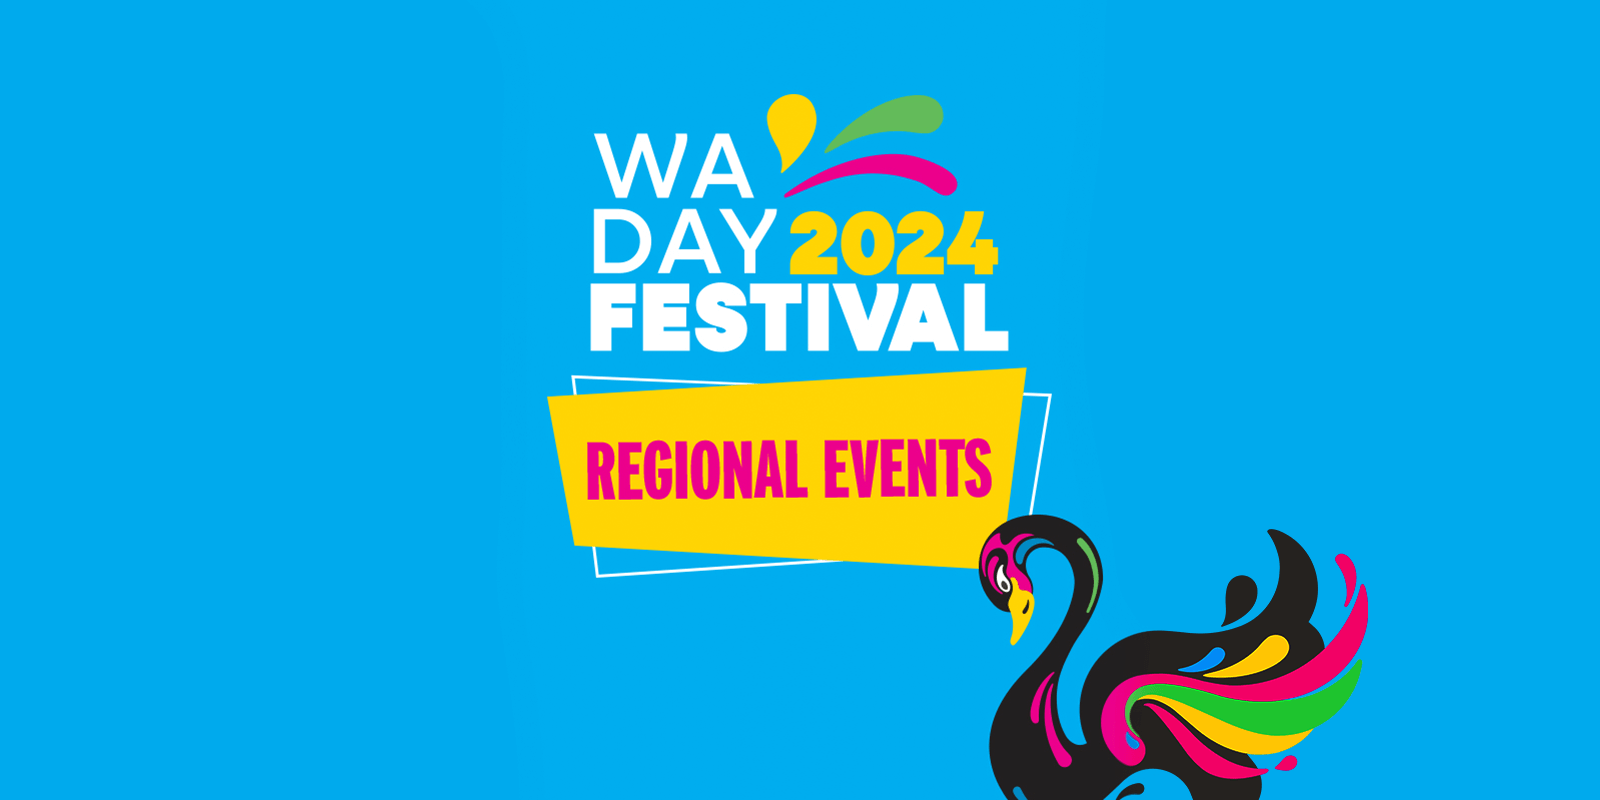 WA Day Festival 2024 - Regional Events